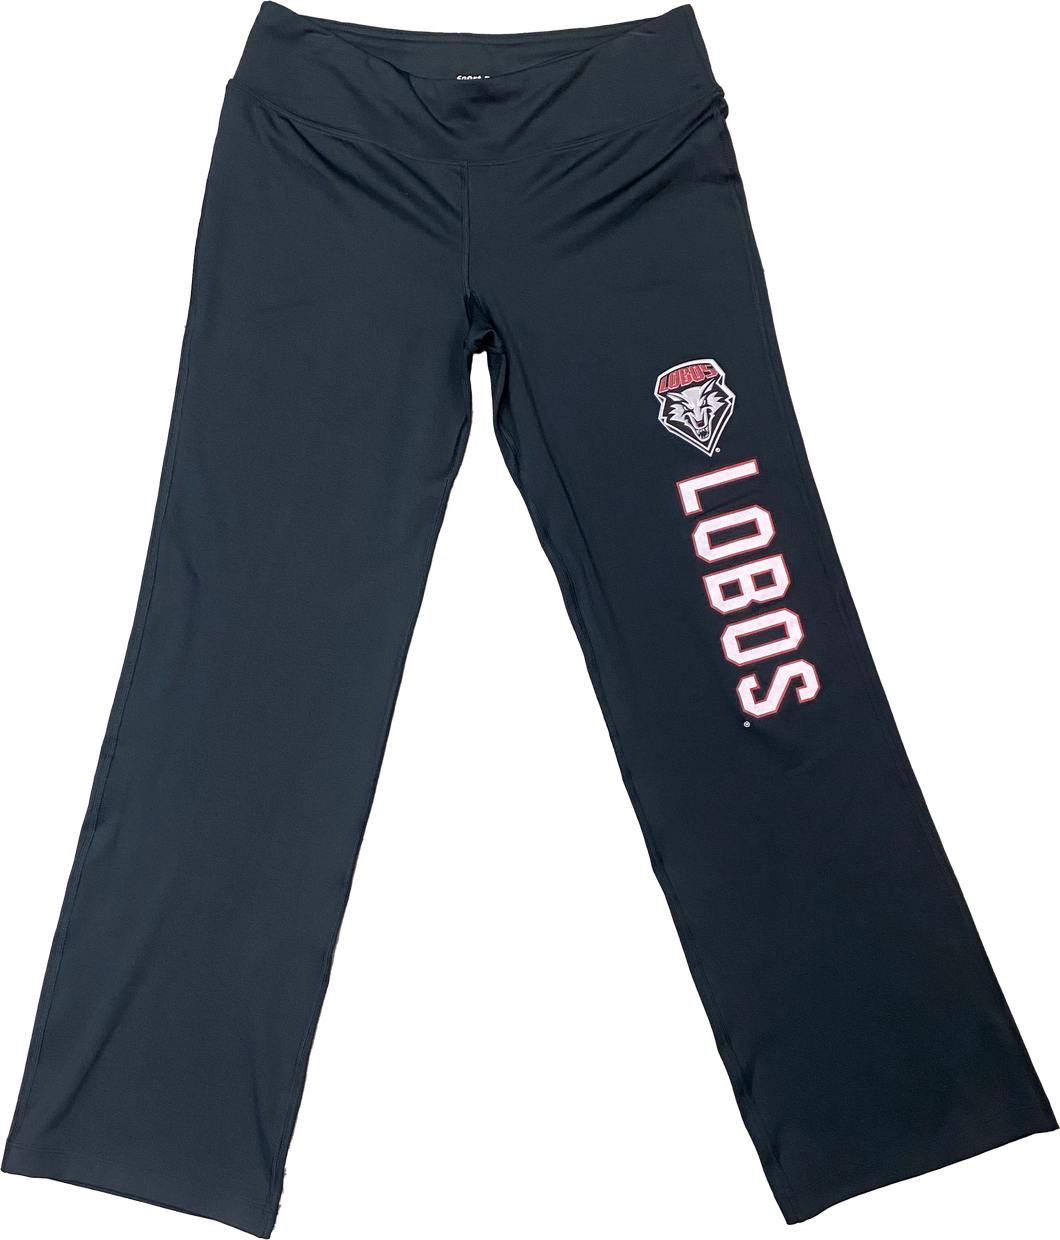 Ladies Black Lobos Yoga Pants